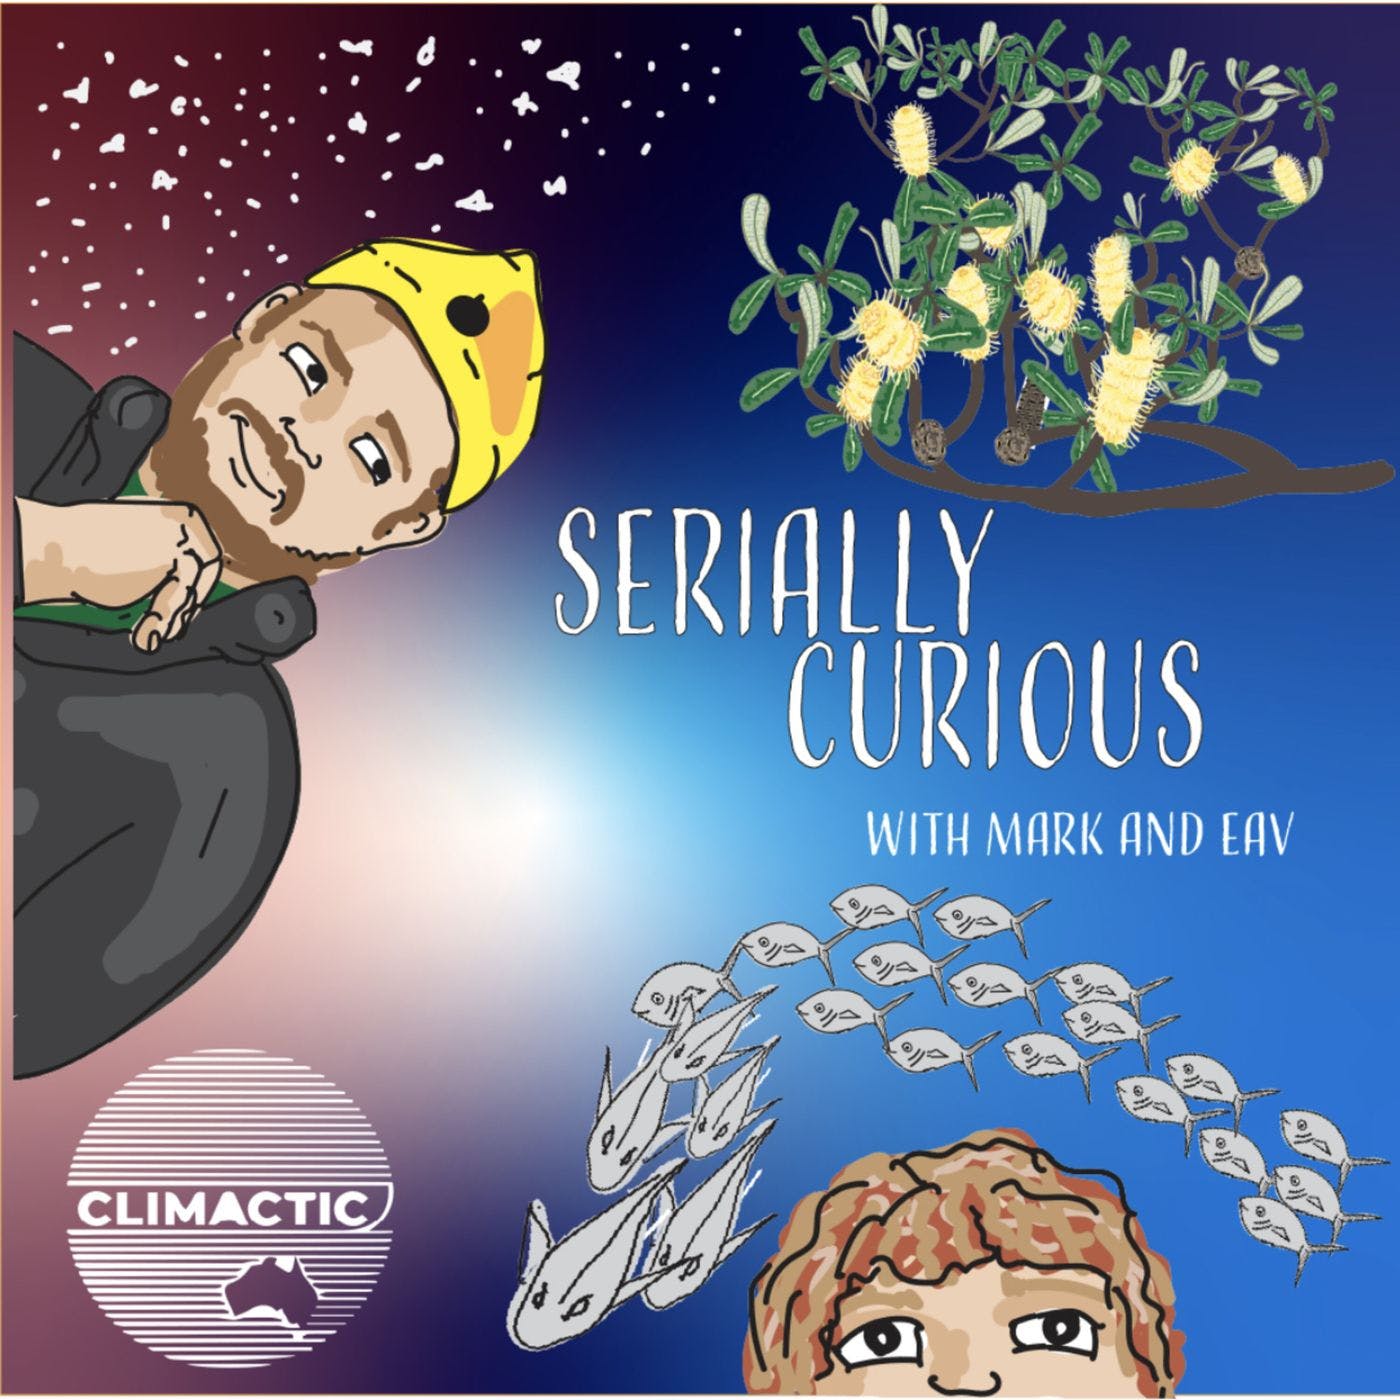 Serially Curious | with Mark and Eav's artwork